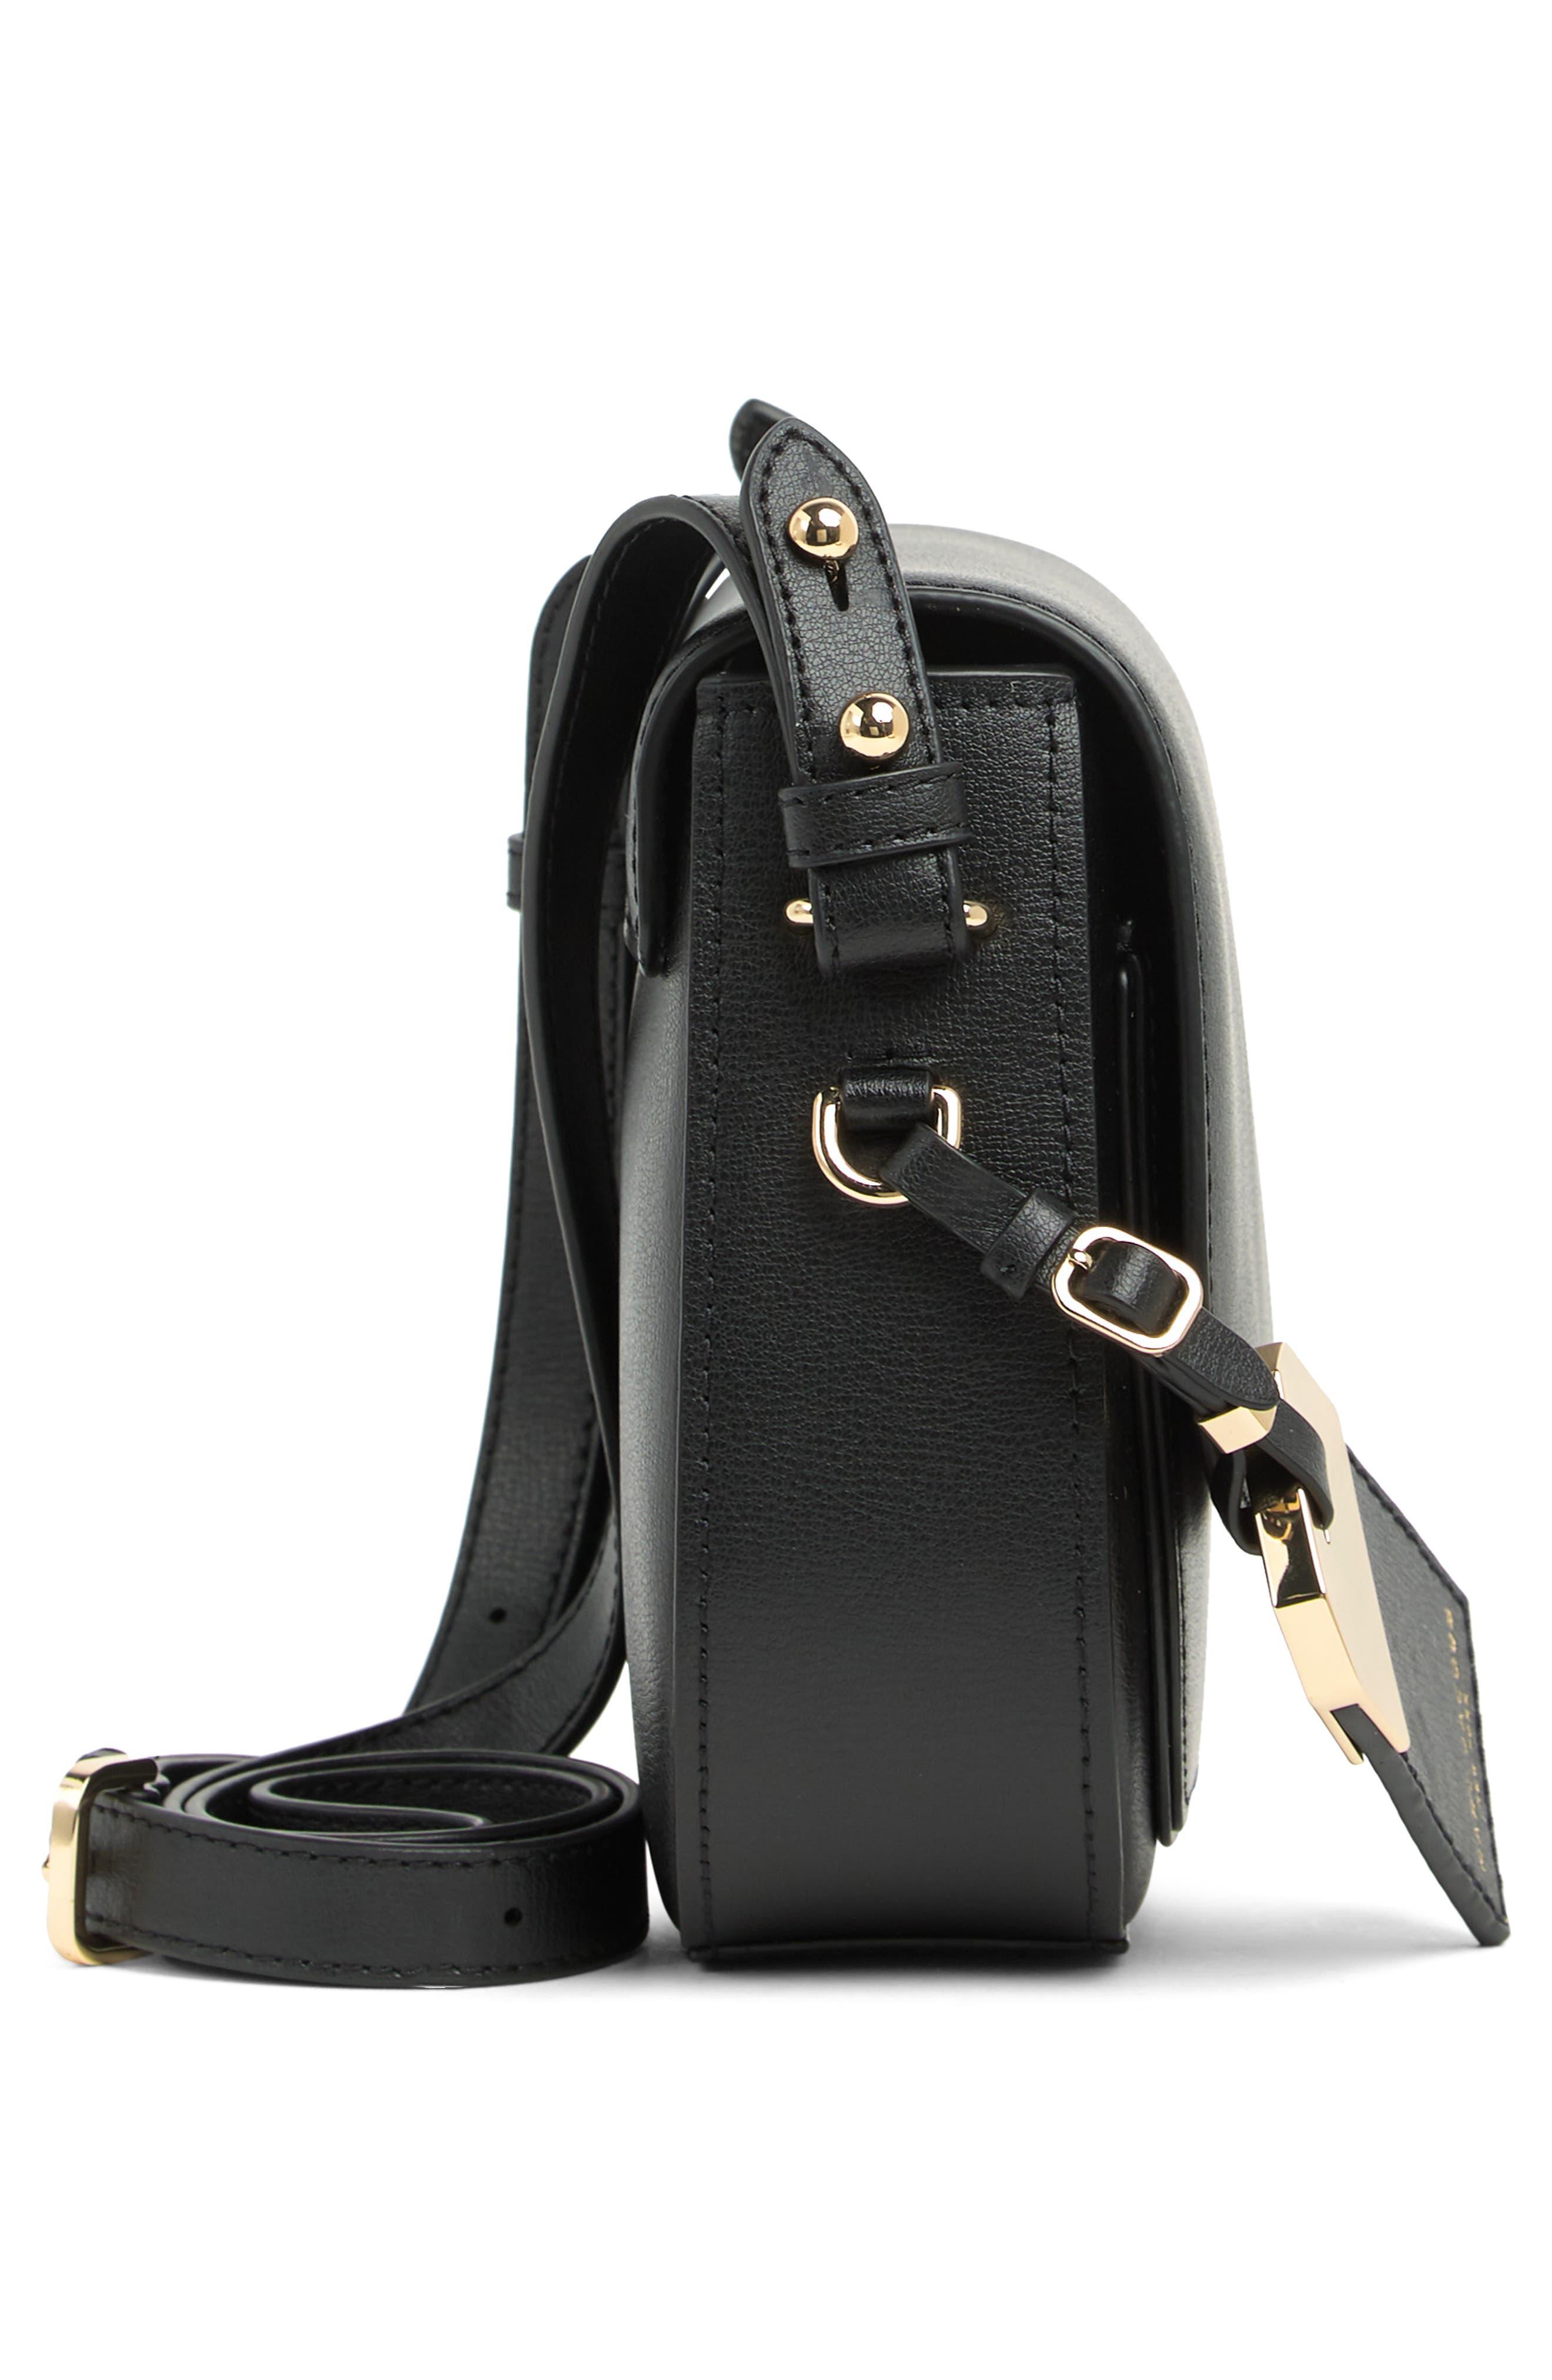 New MARC JACOBS New York Mini Rider Black Leather Crossbody Bag Black NWT  $295